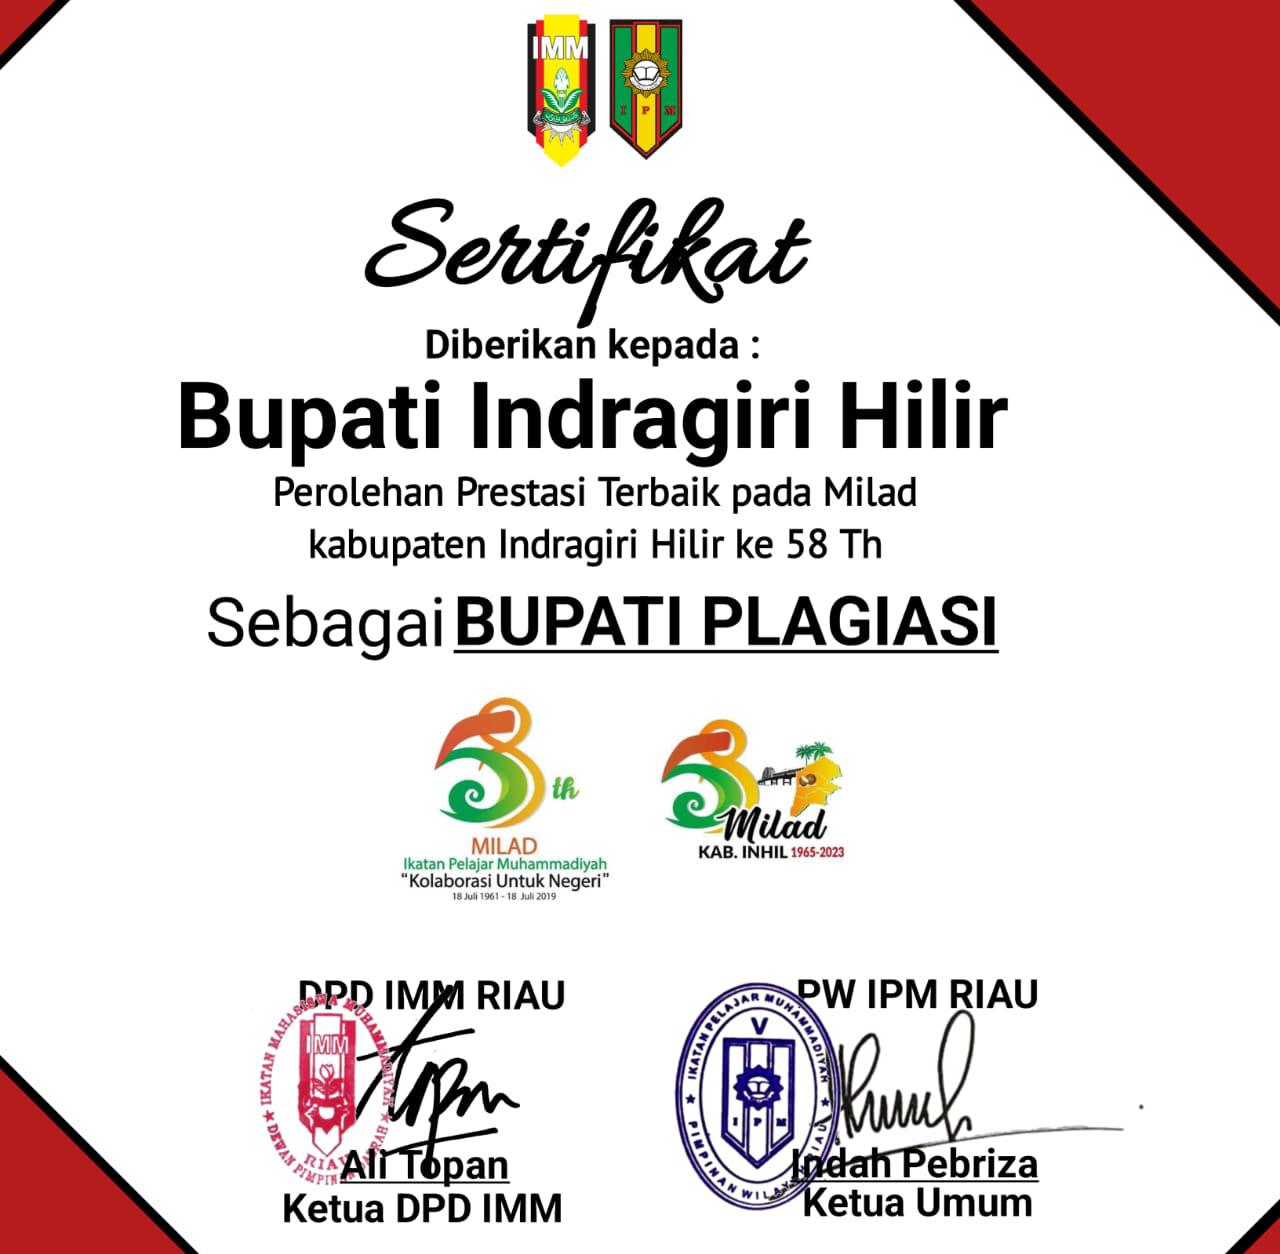 PW IPM & DPD IMM Riau Berikan 'Penghargaan' kepada Bupati INHIL